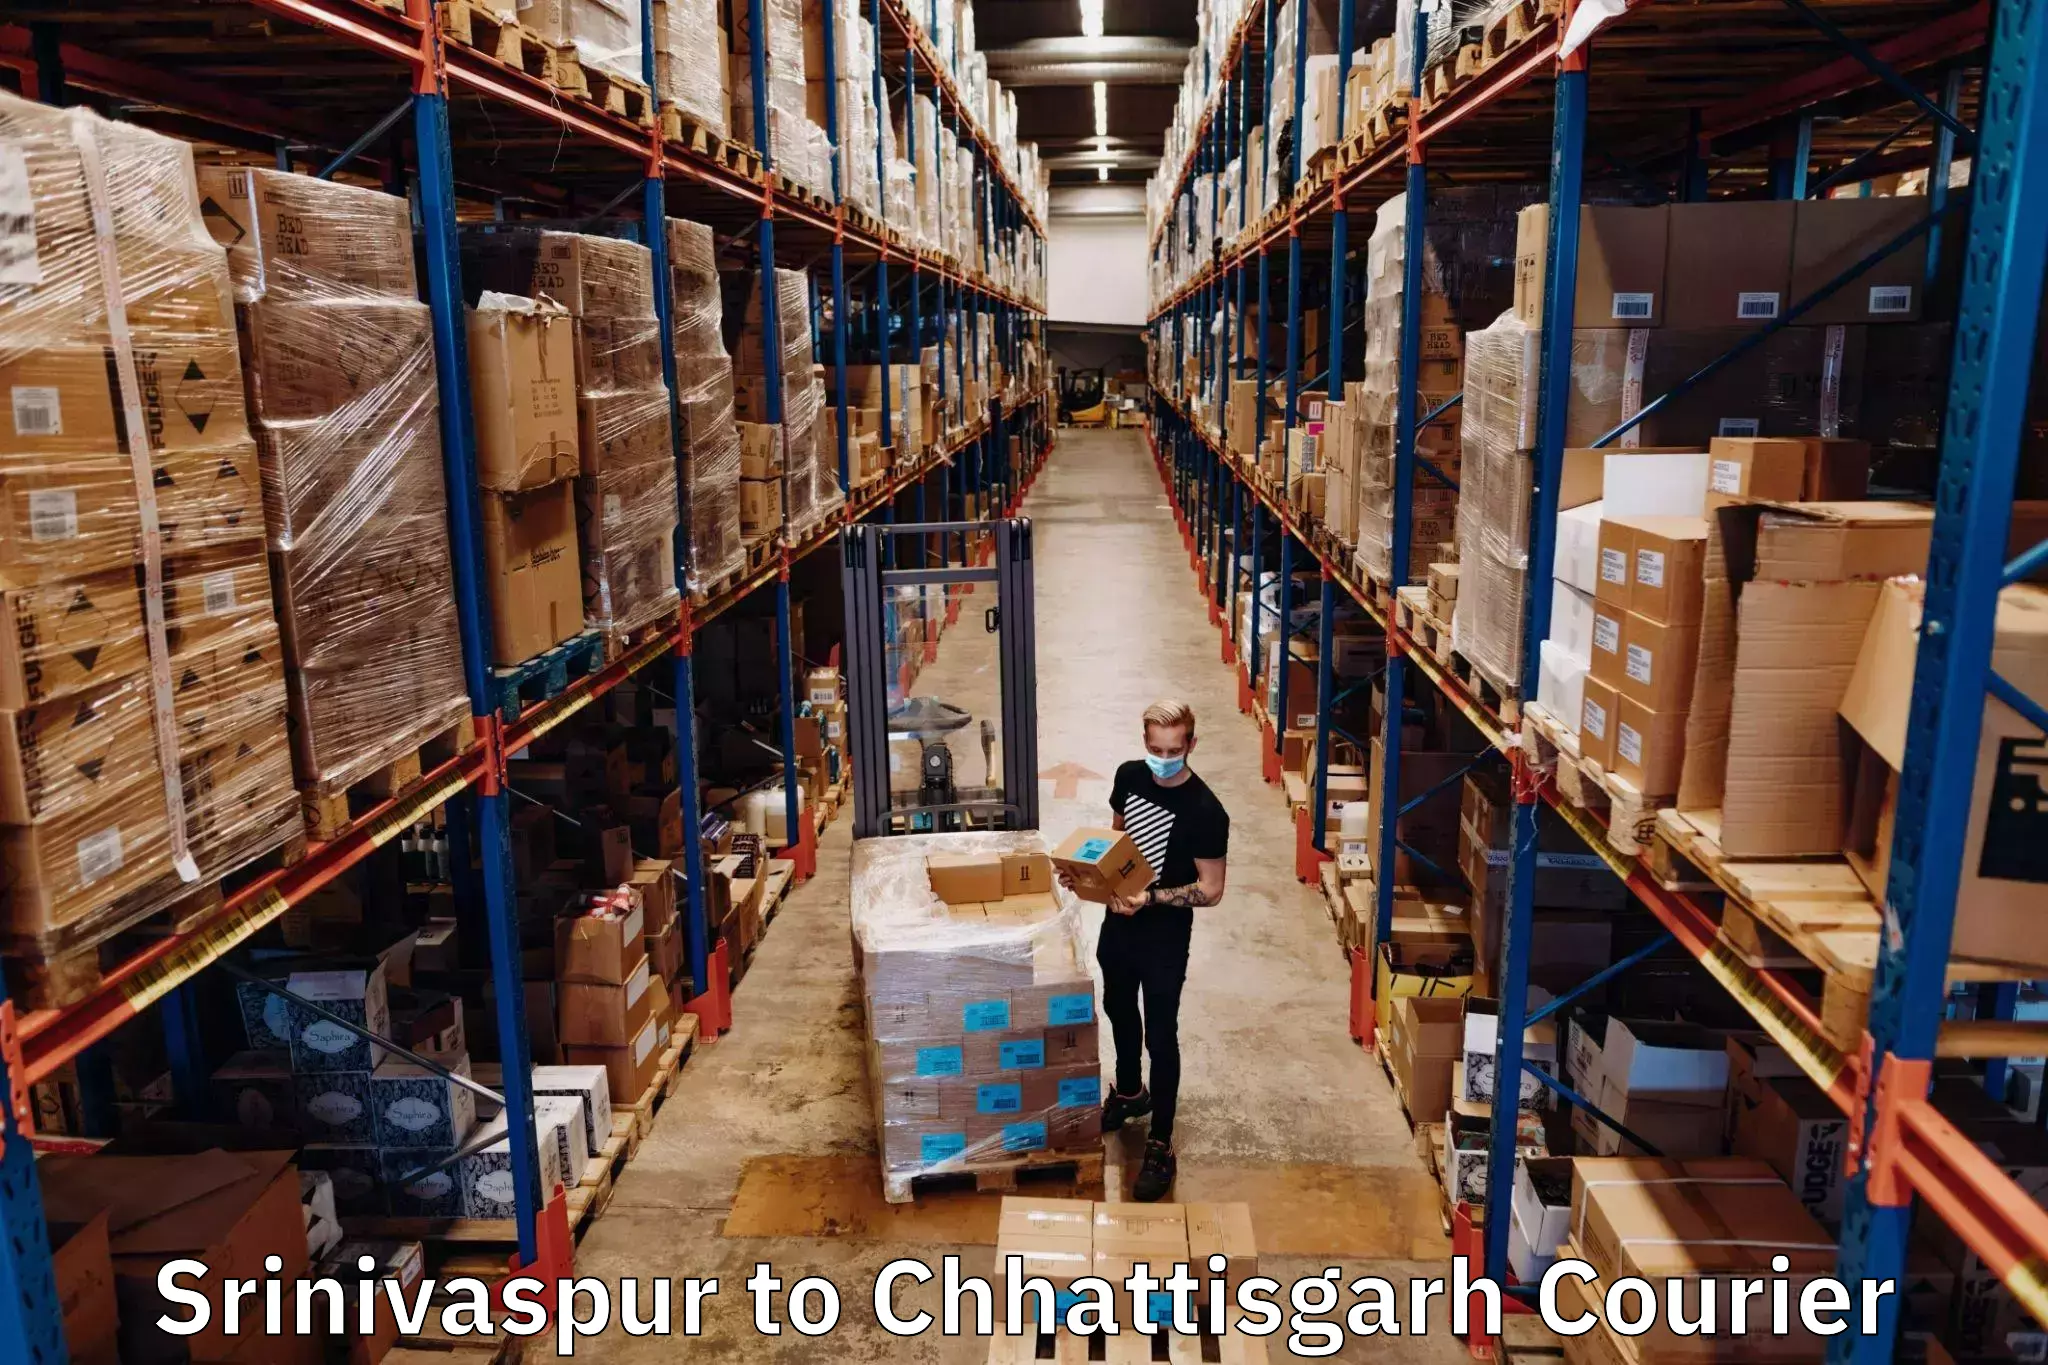 Courier service booking Srinivaspur to Raigarh